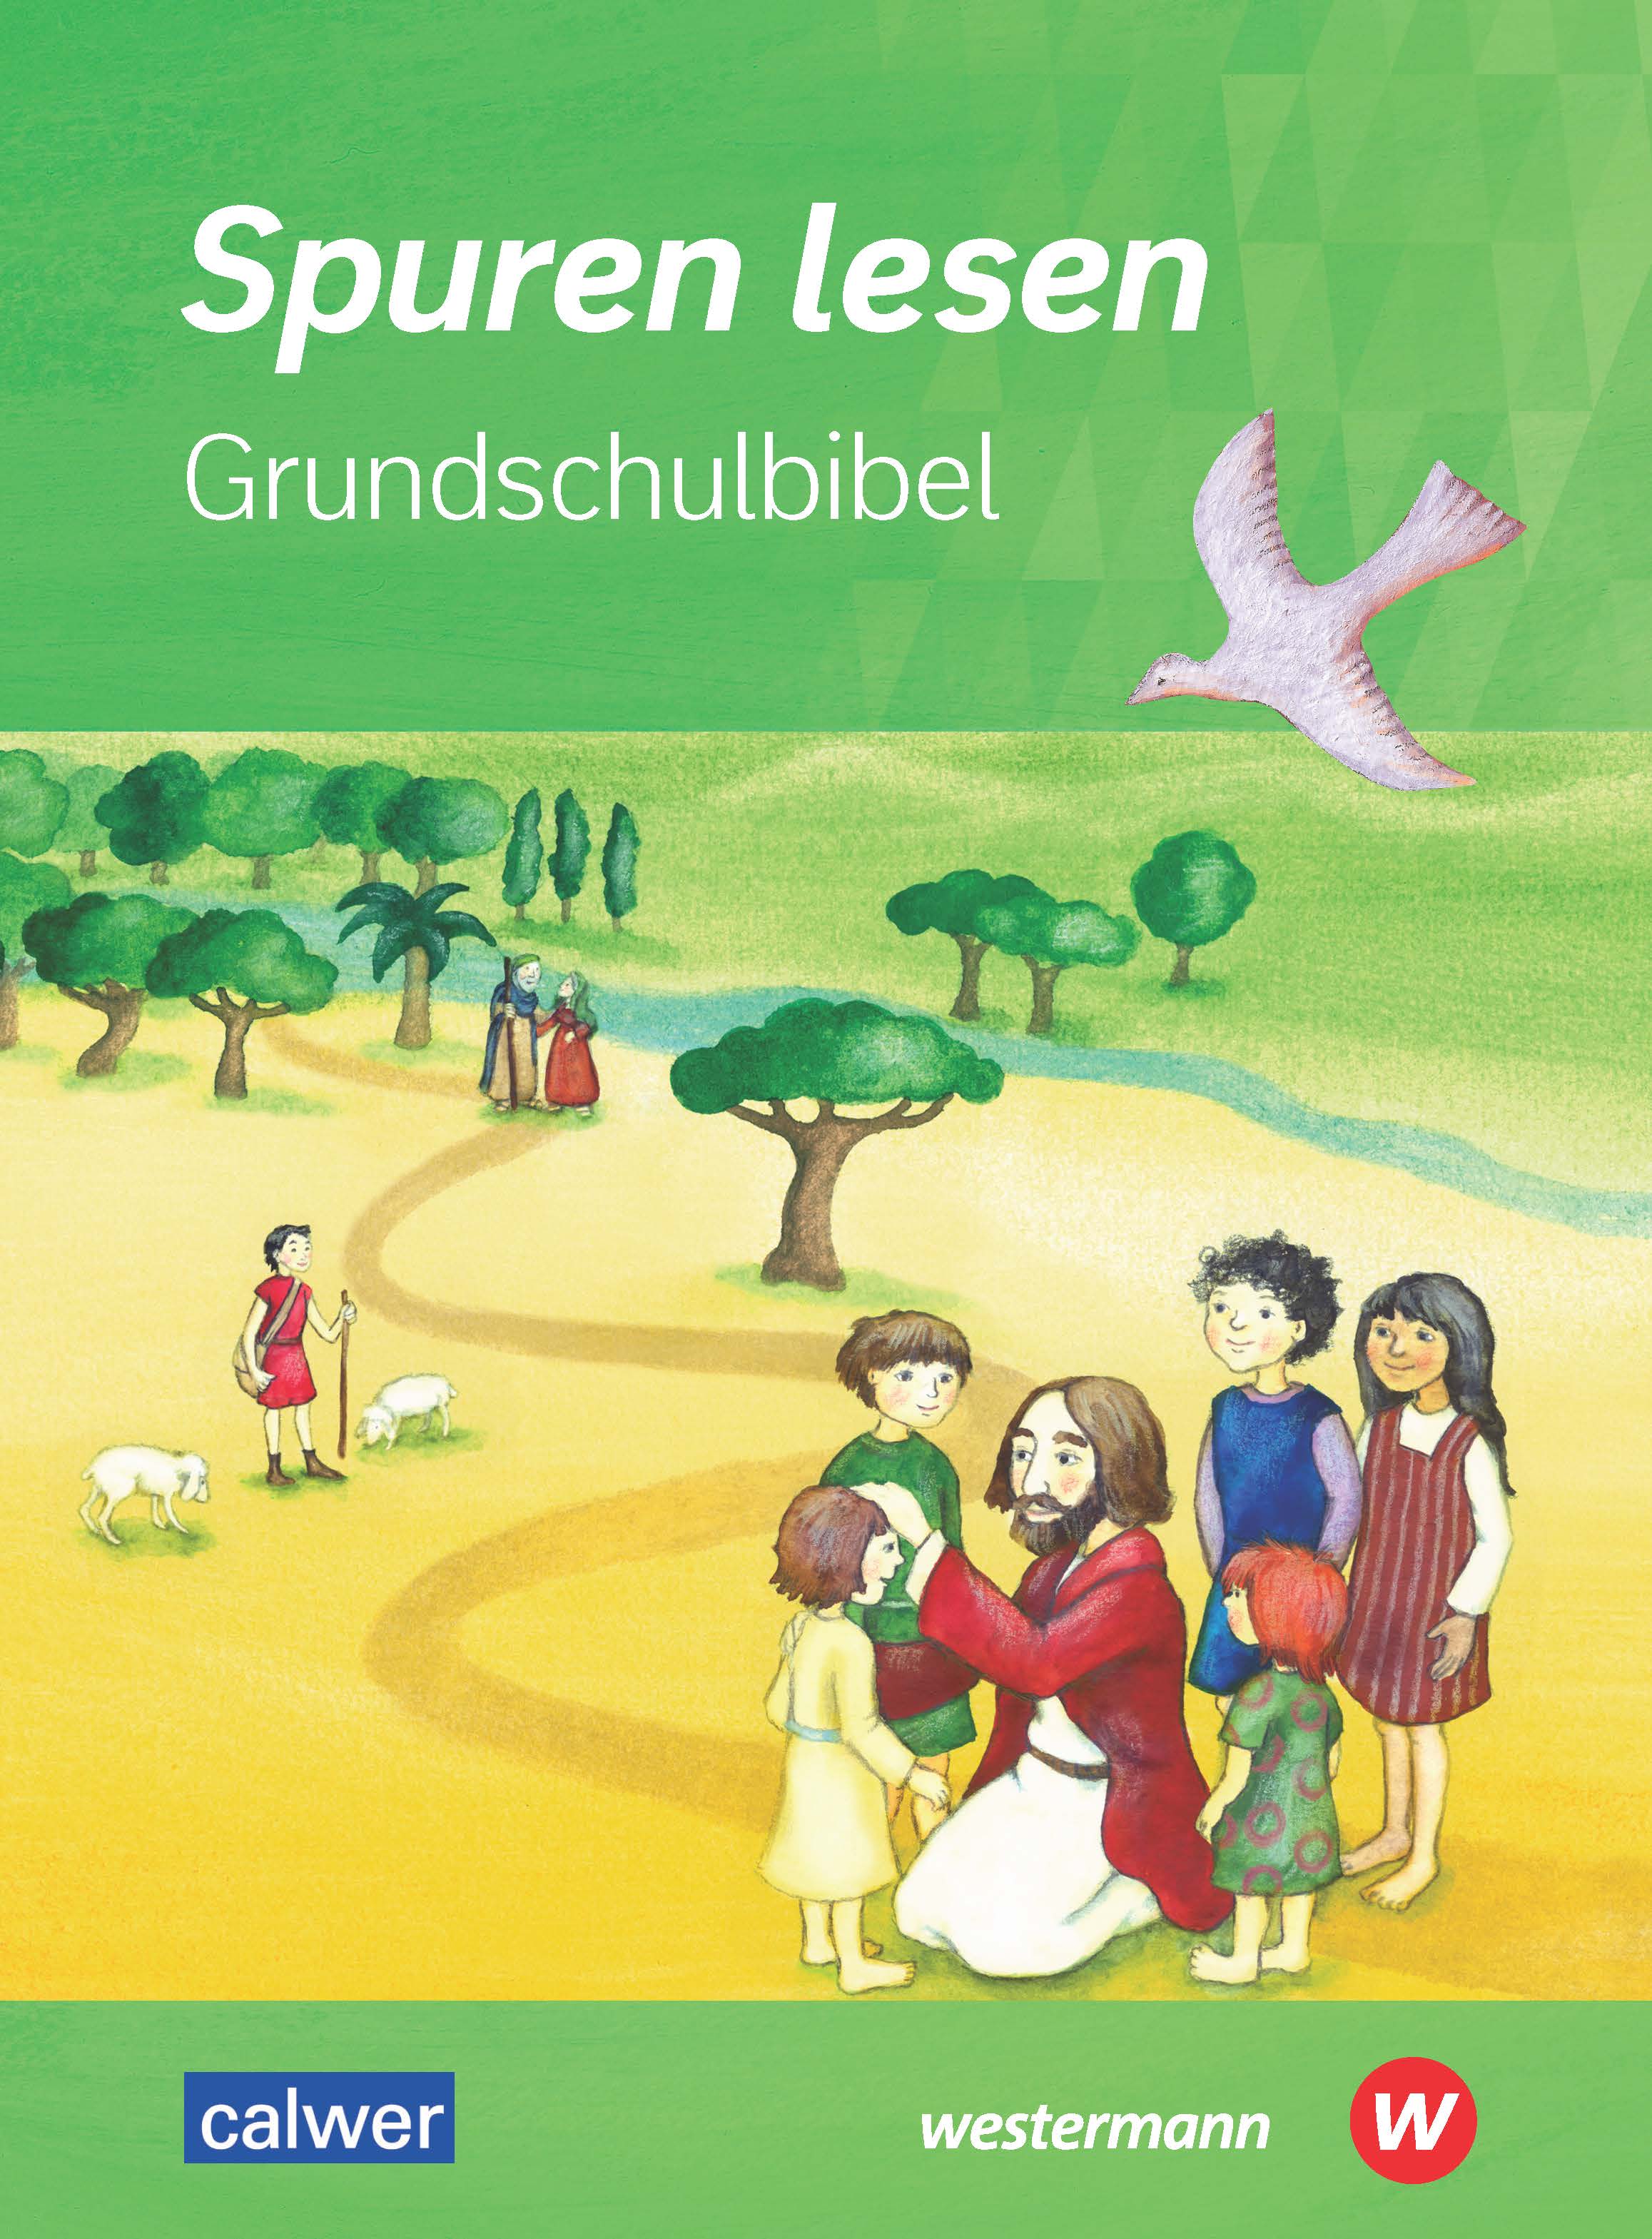 Spuren lesen Grundschulbibel - Cover